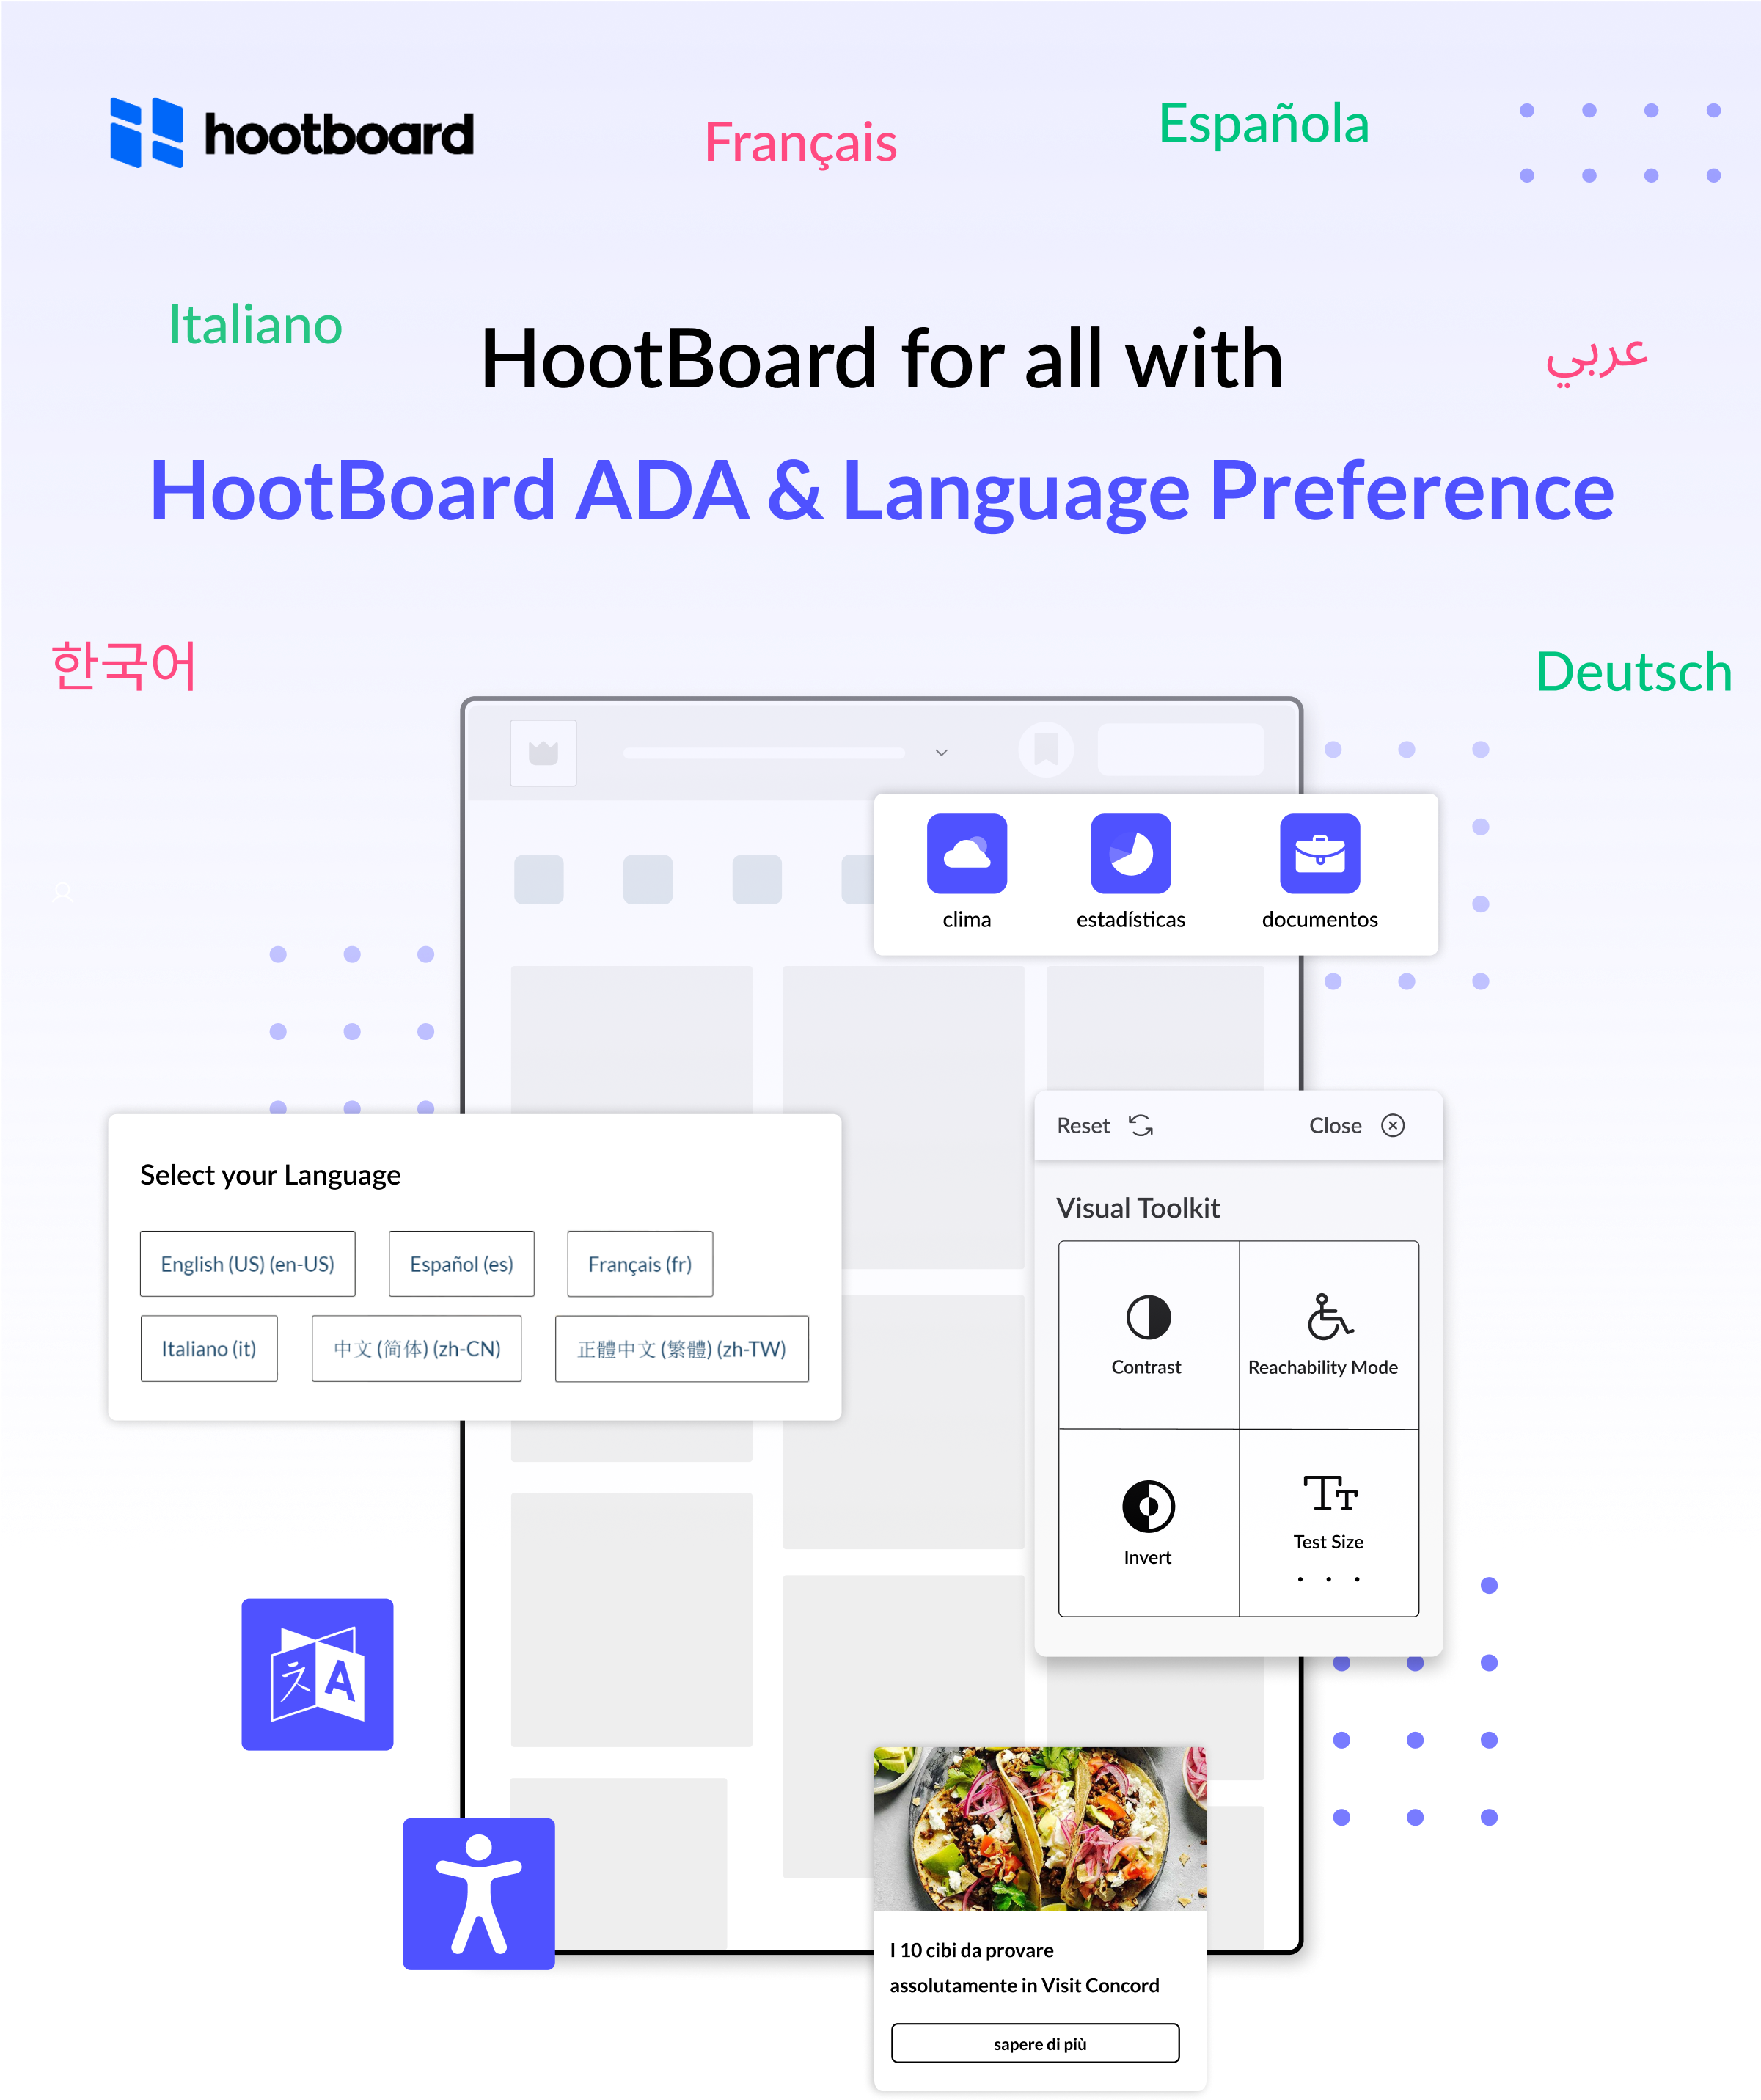 HootBoard ADA & Language Preference